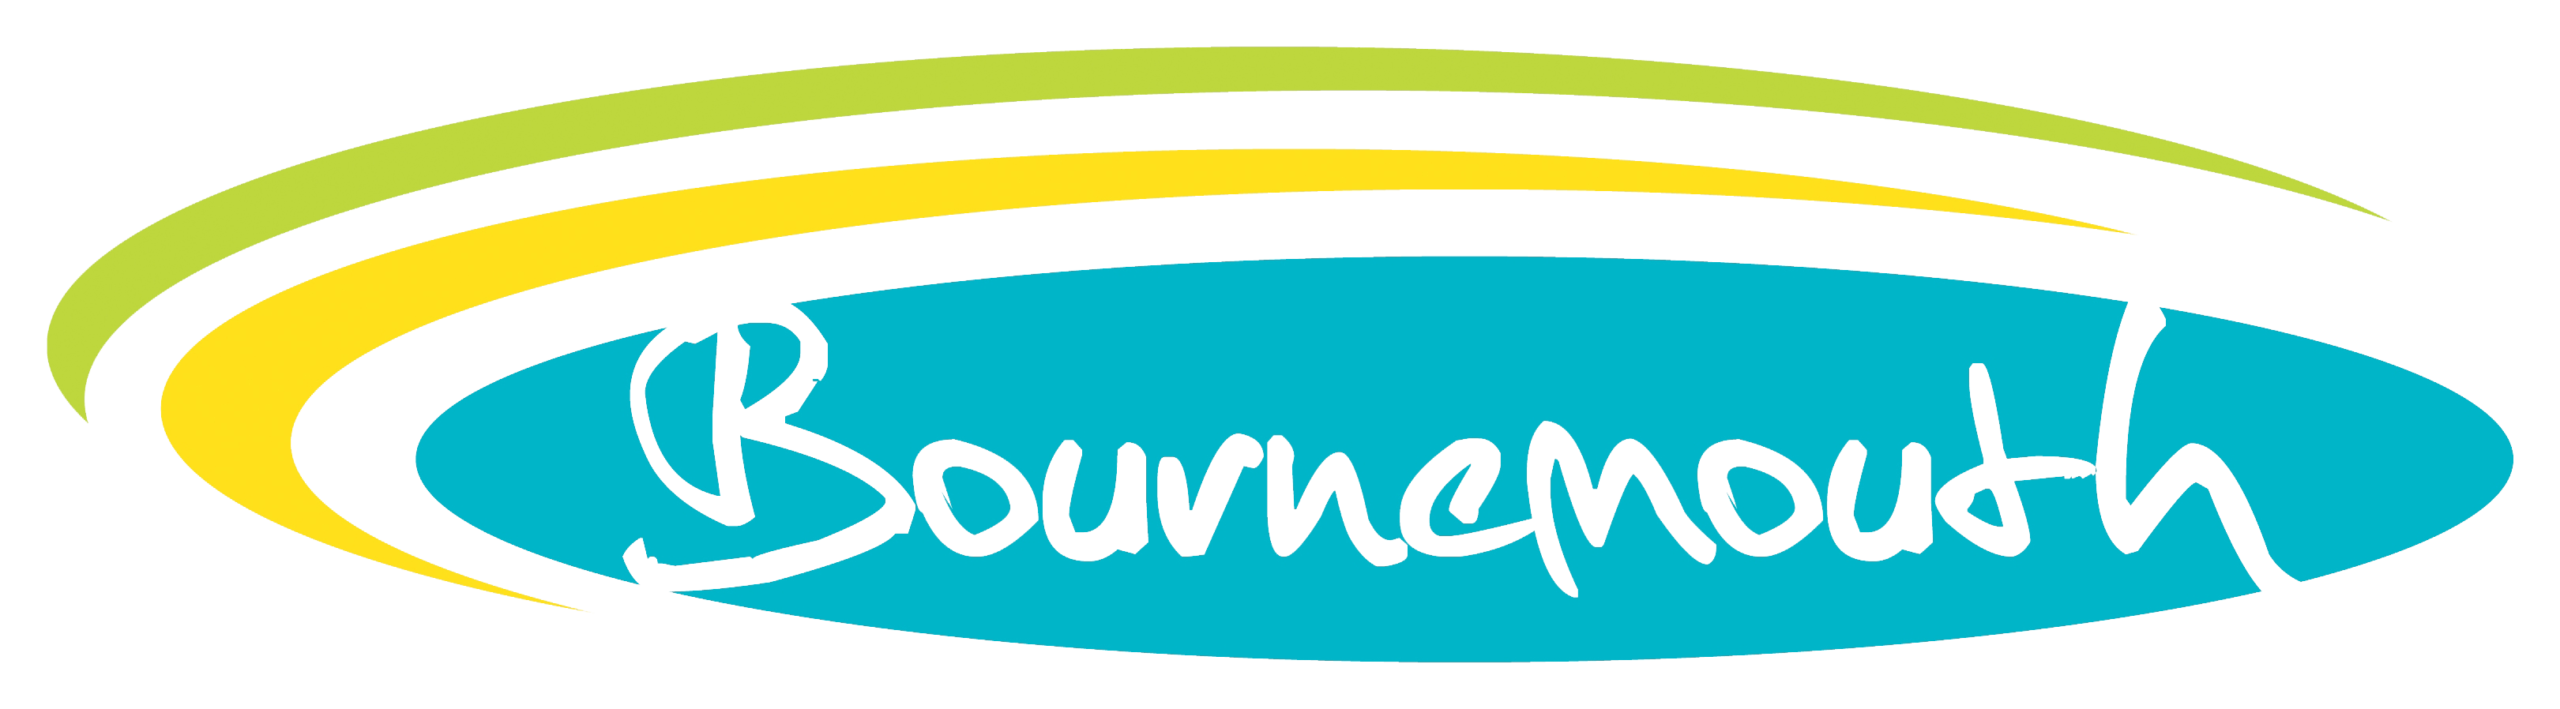 Client logo for Bournemouth Air Festival website redesign